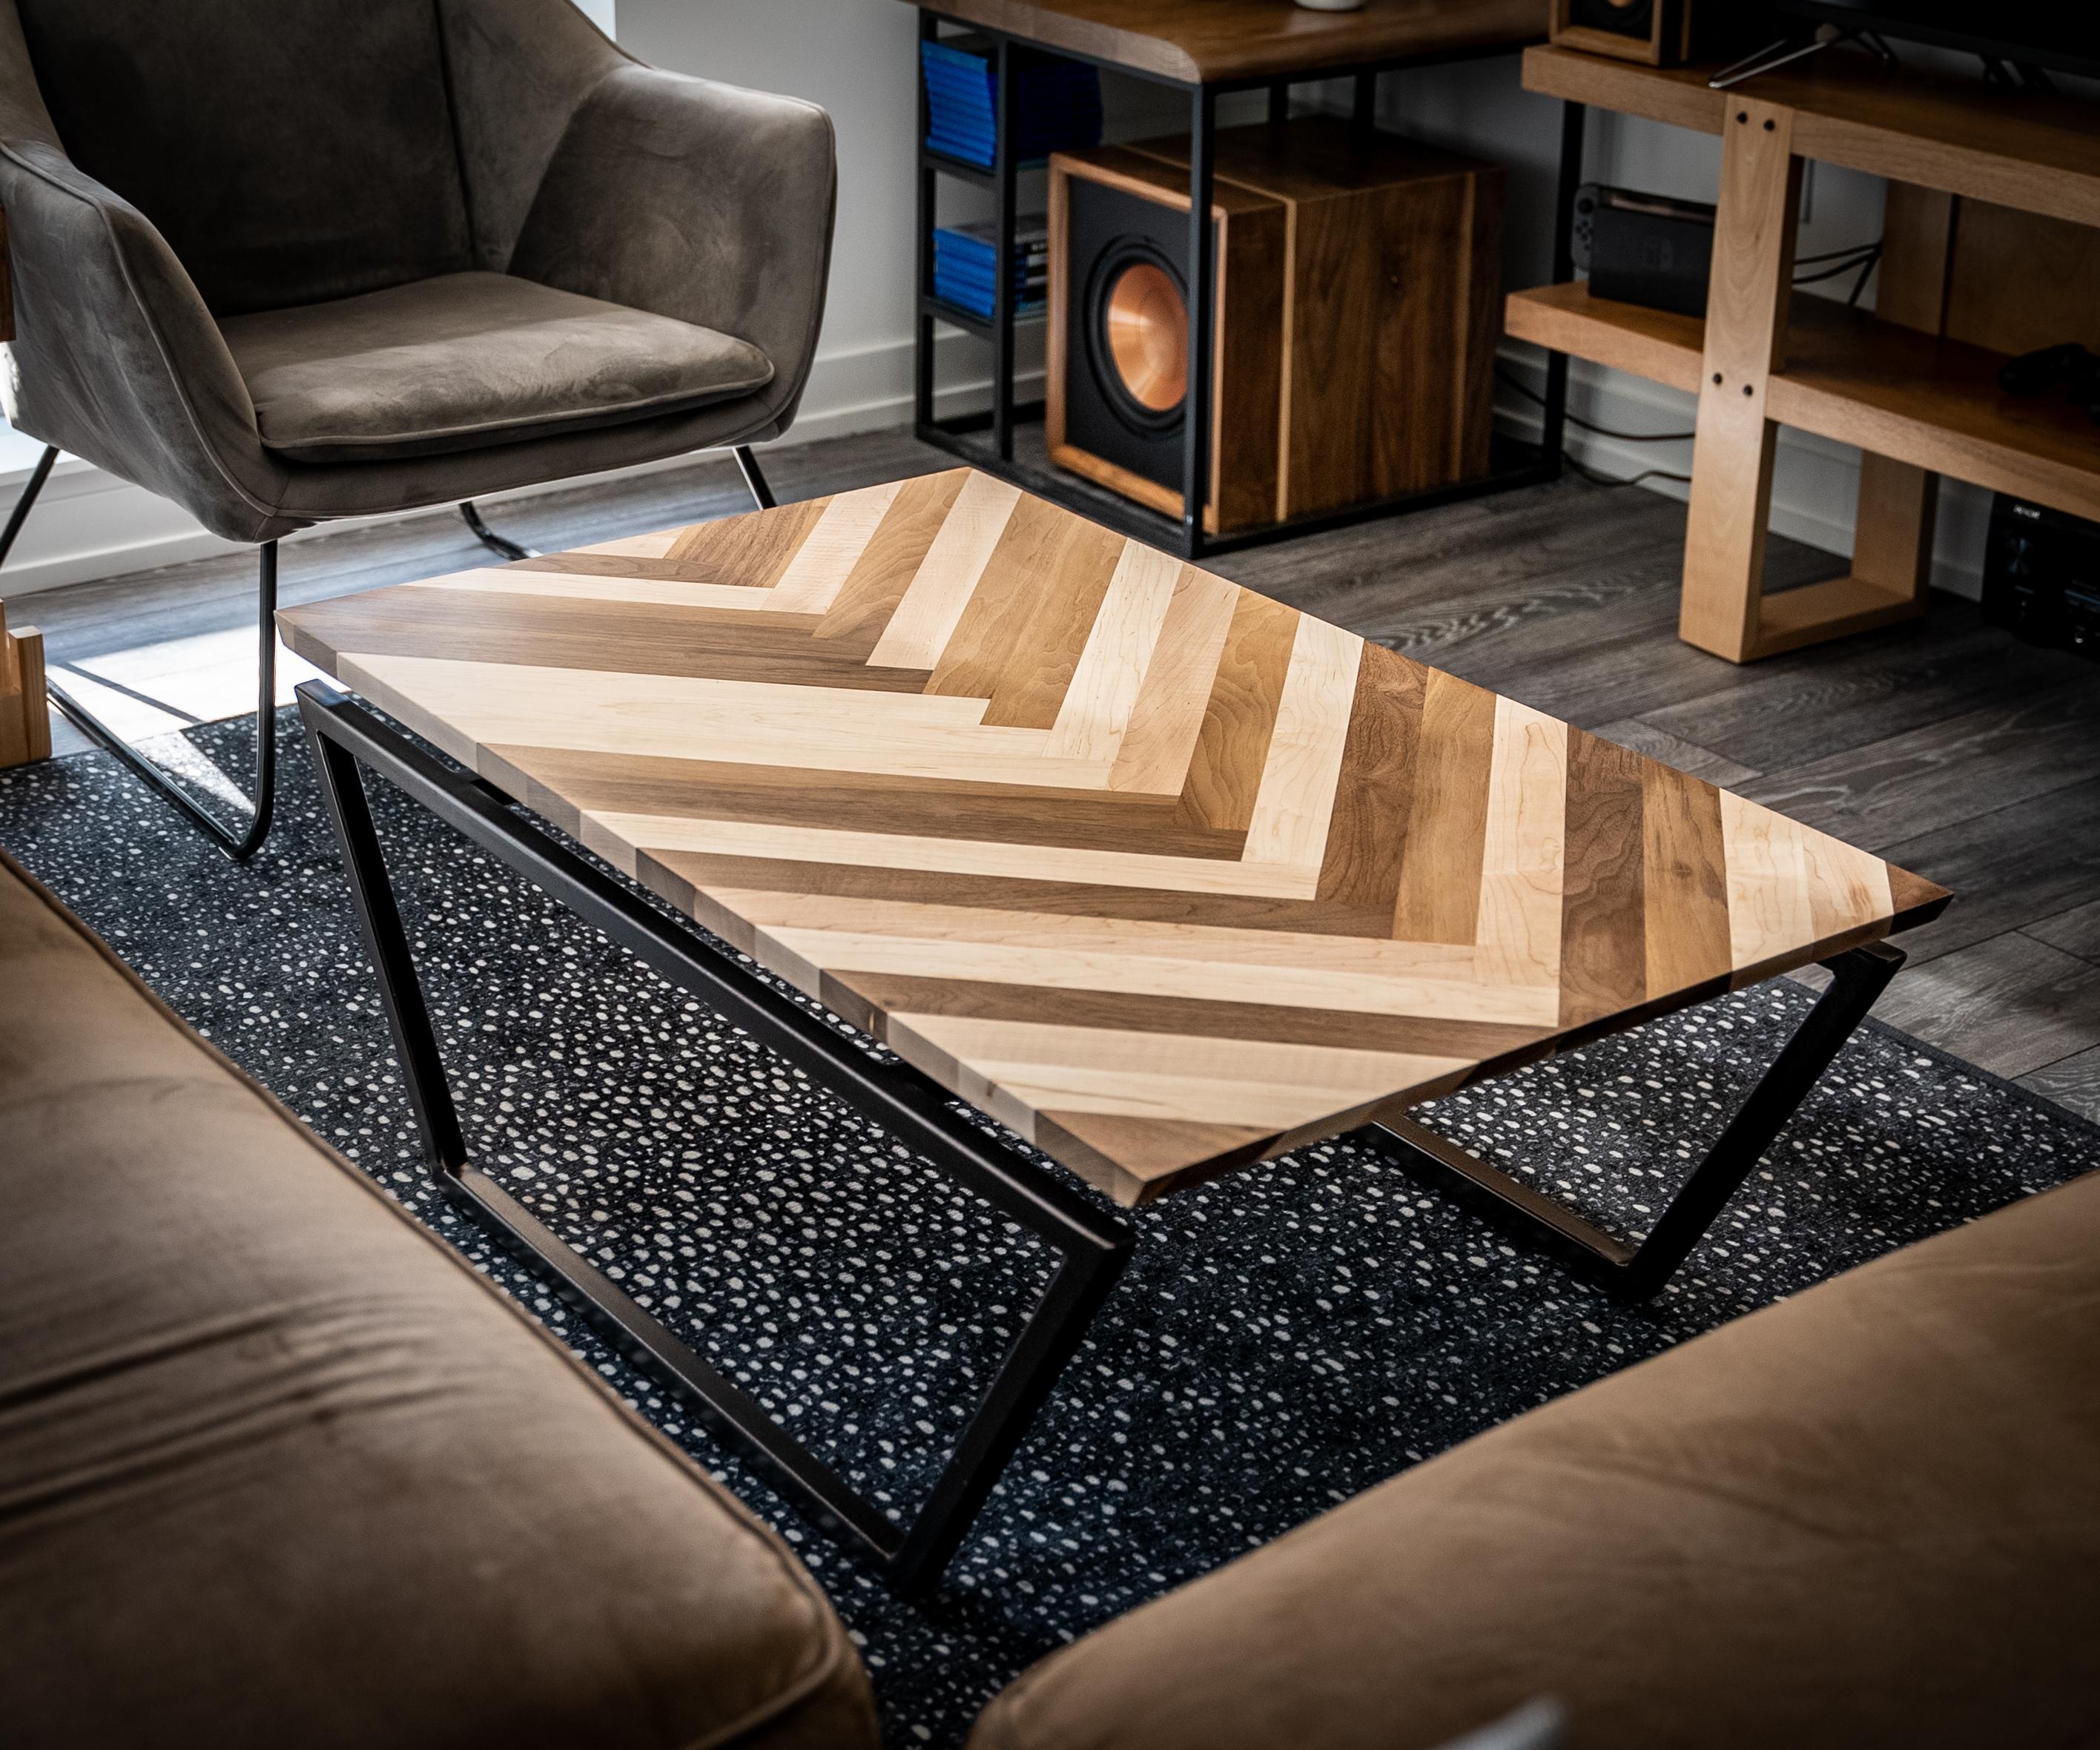 The Solid Wood Herringbone Pattern Table V2.0